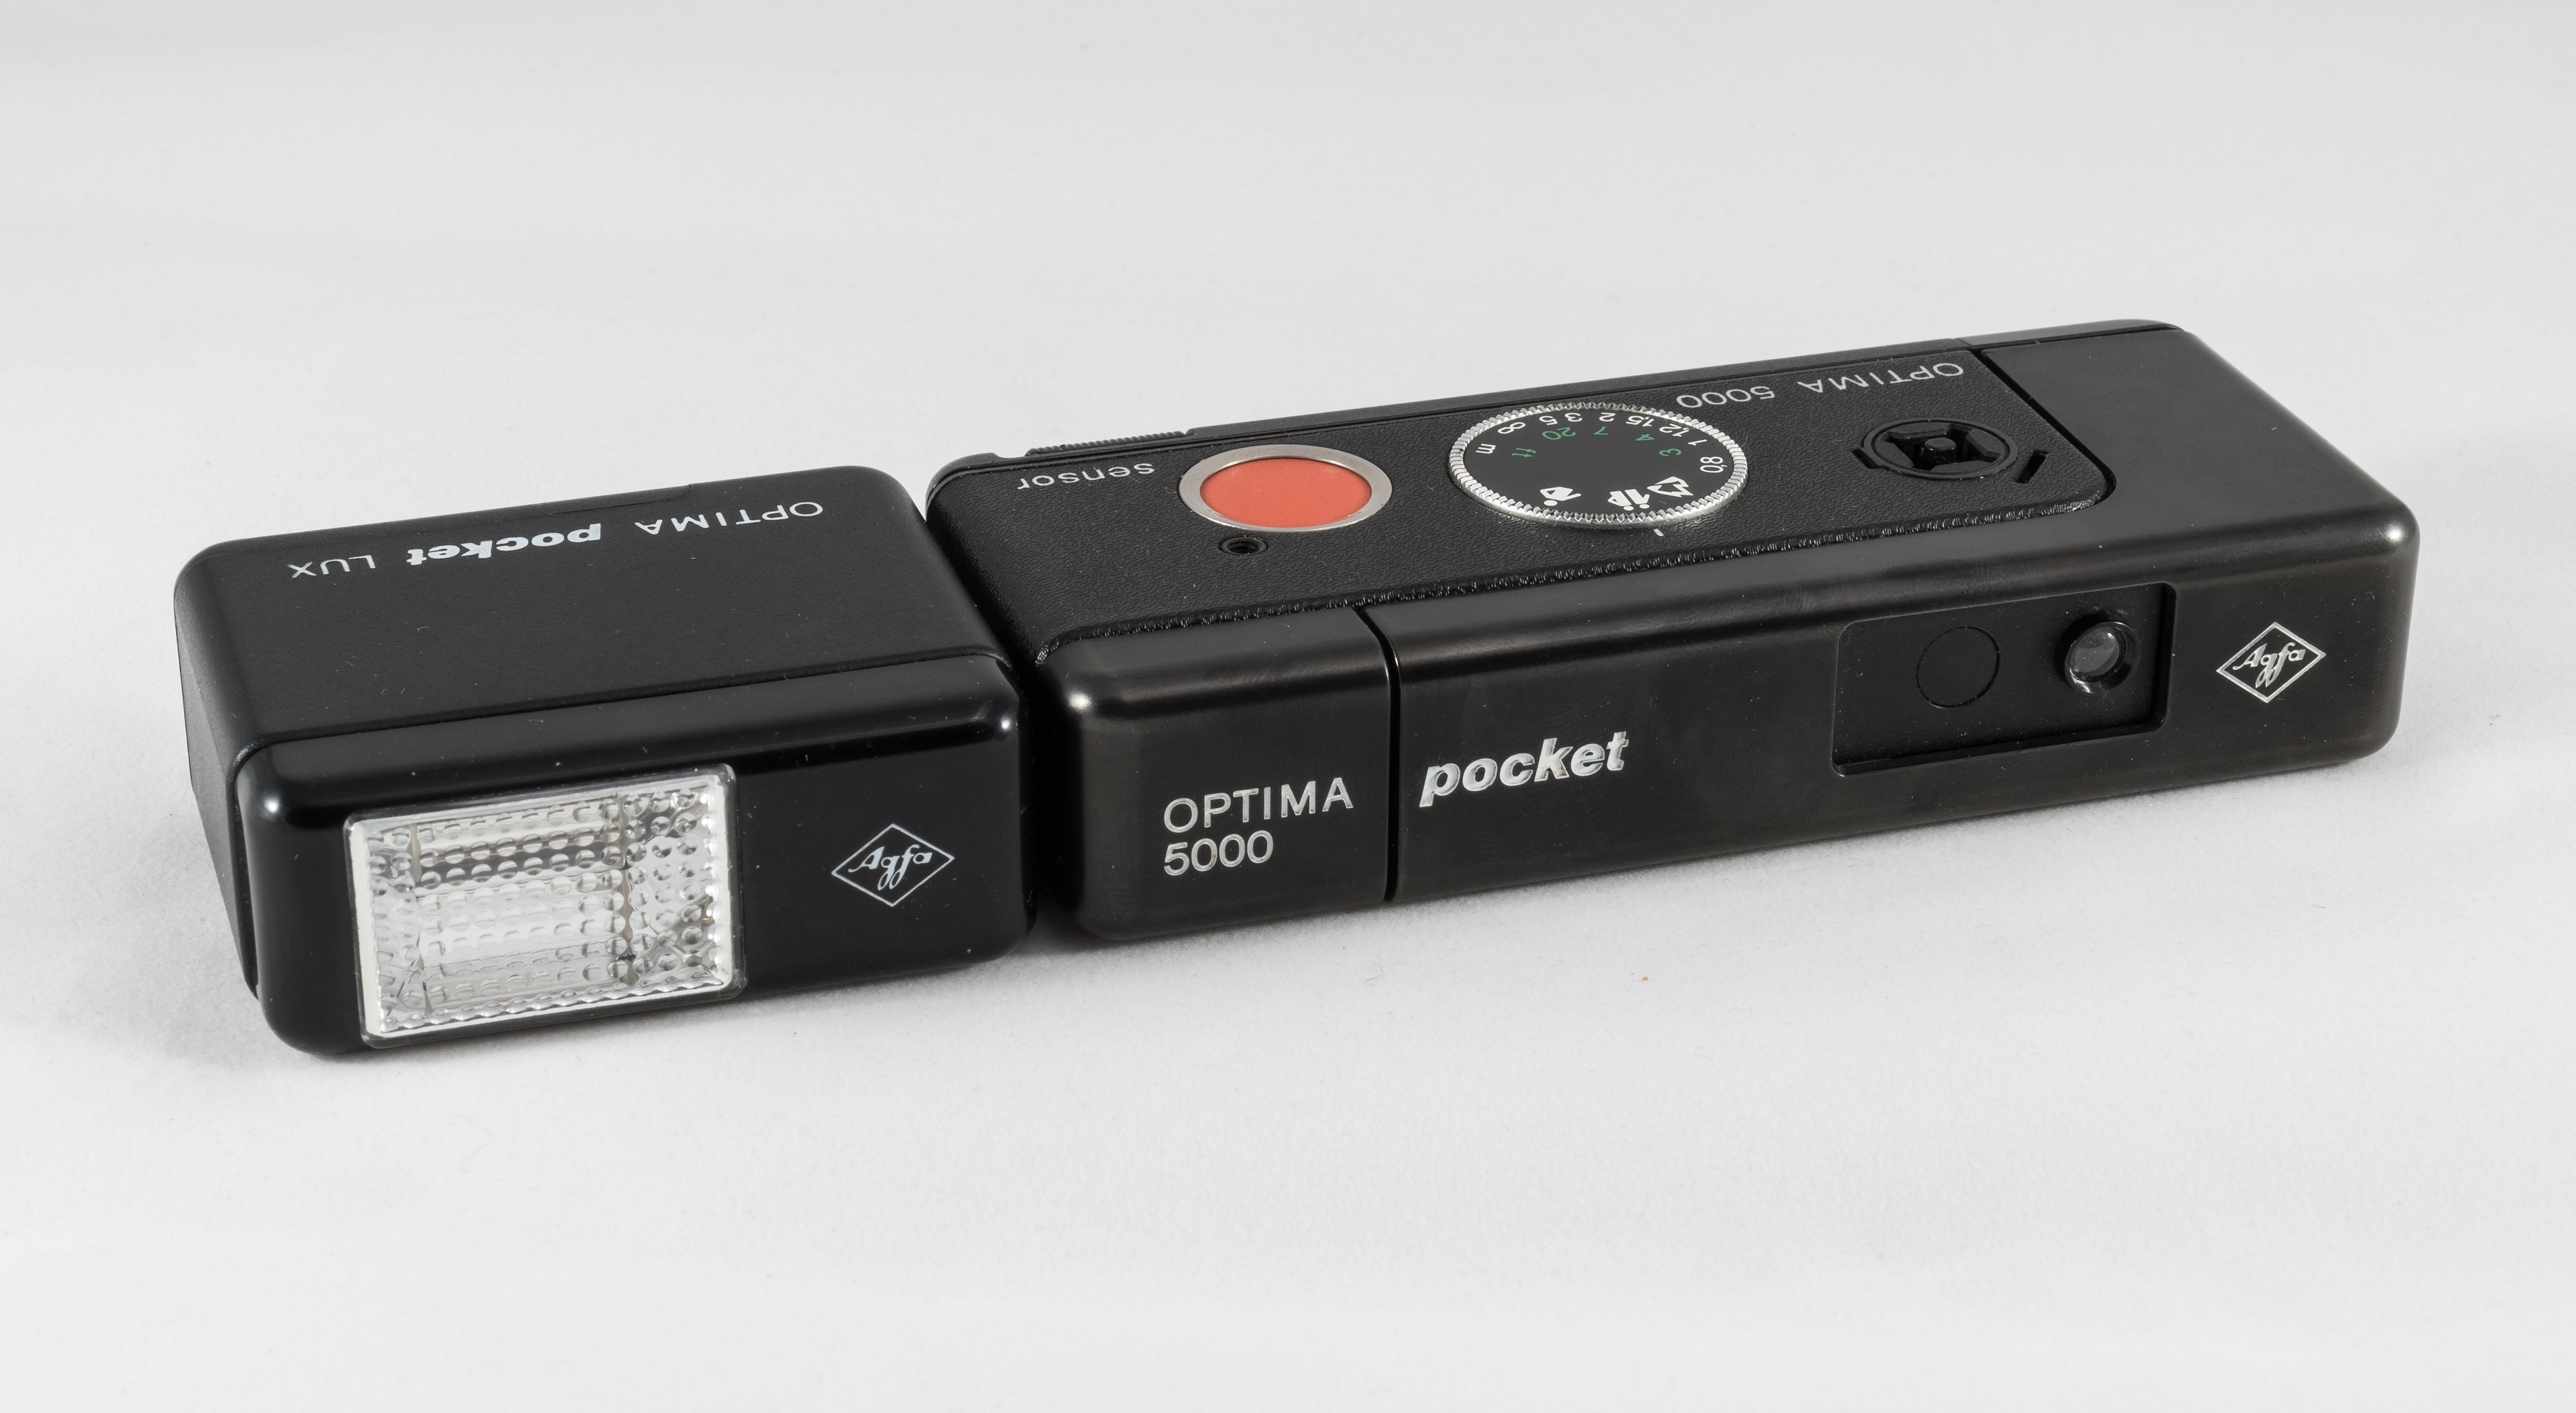 2016 Agfa Optima 5000 Pocket 2